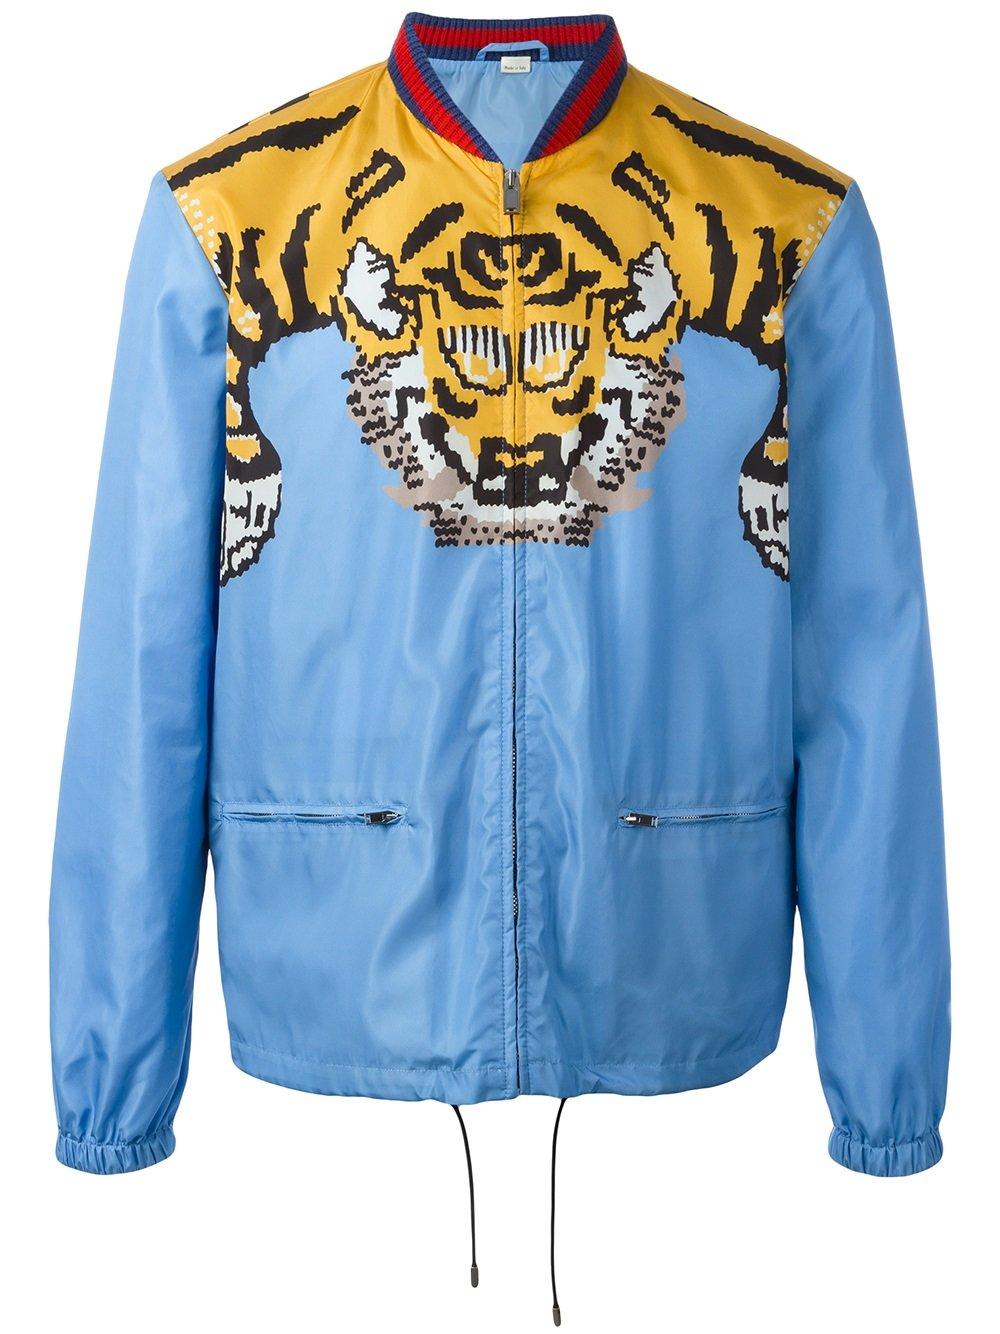 Forenkle Søgemaskine markedsføring hav det sjovt Gucci Synthetic Tiger Print Bomber Jacket in Light Blue (Blue) for Men -  Lyst